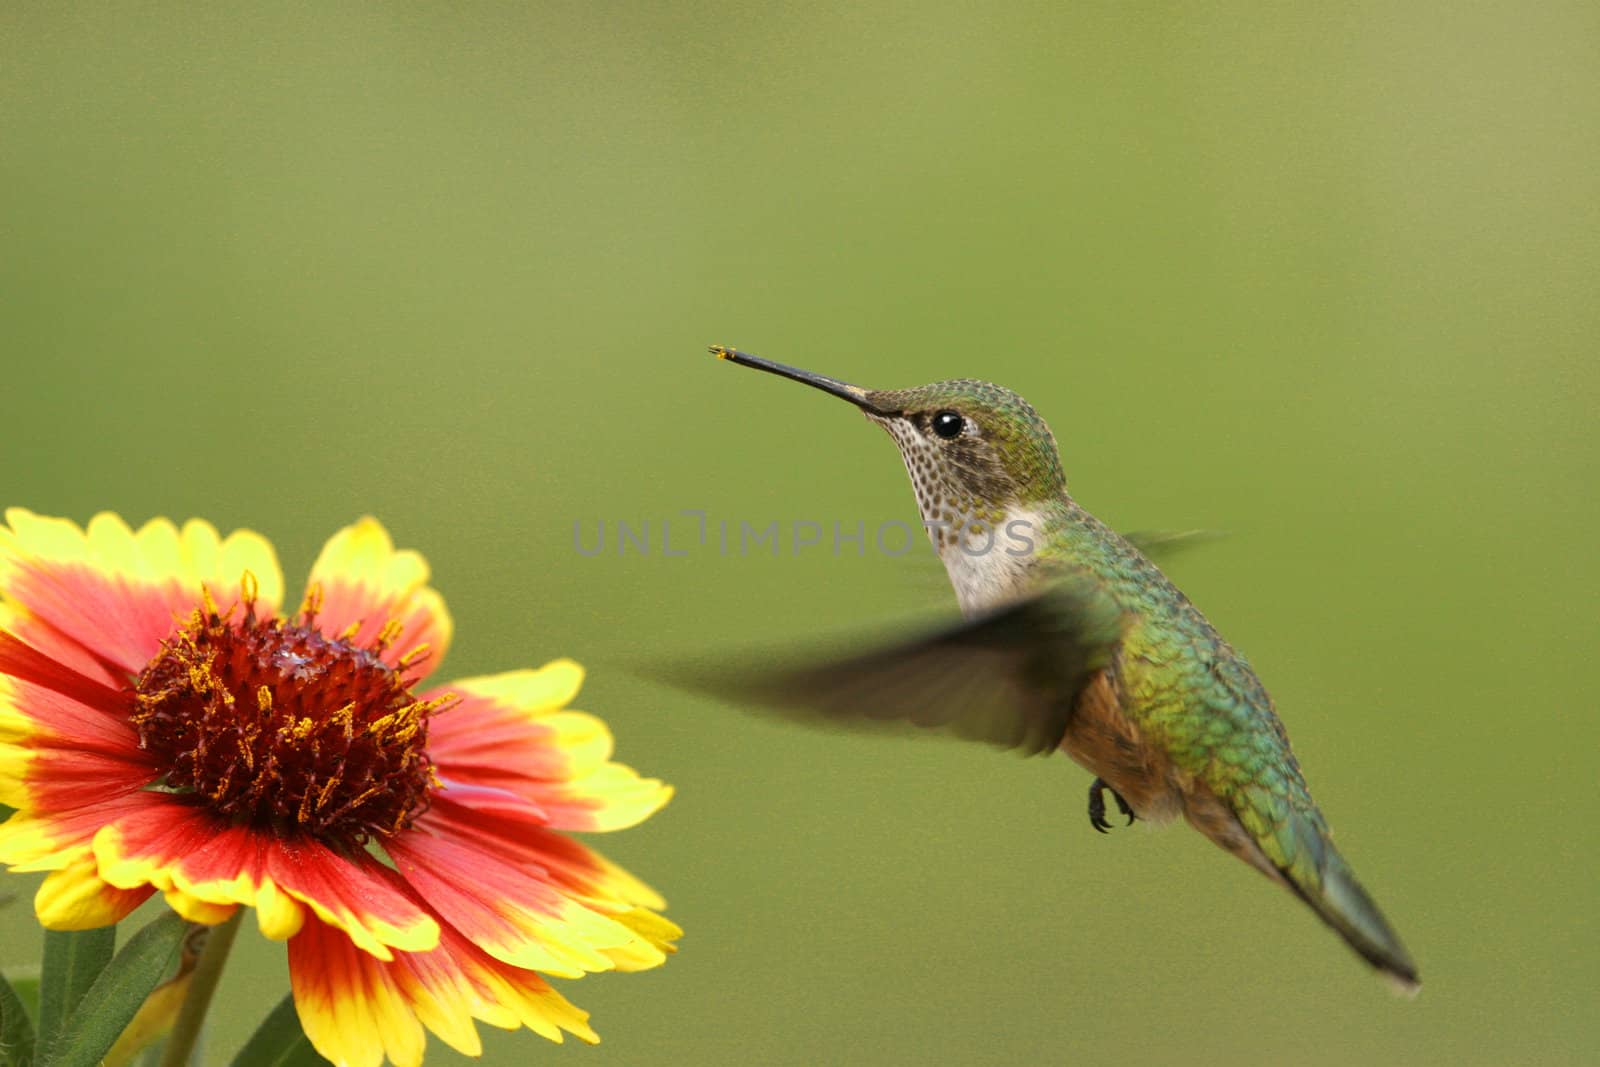 Broad-tailed hummingbird female by donya_nedomam